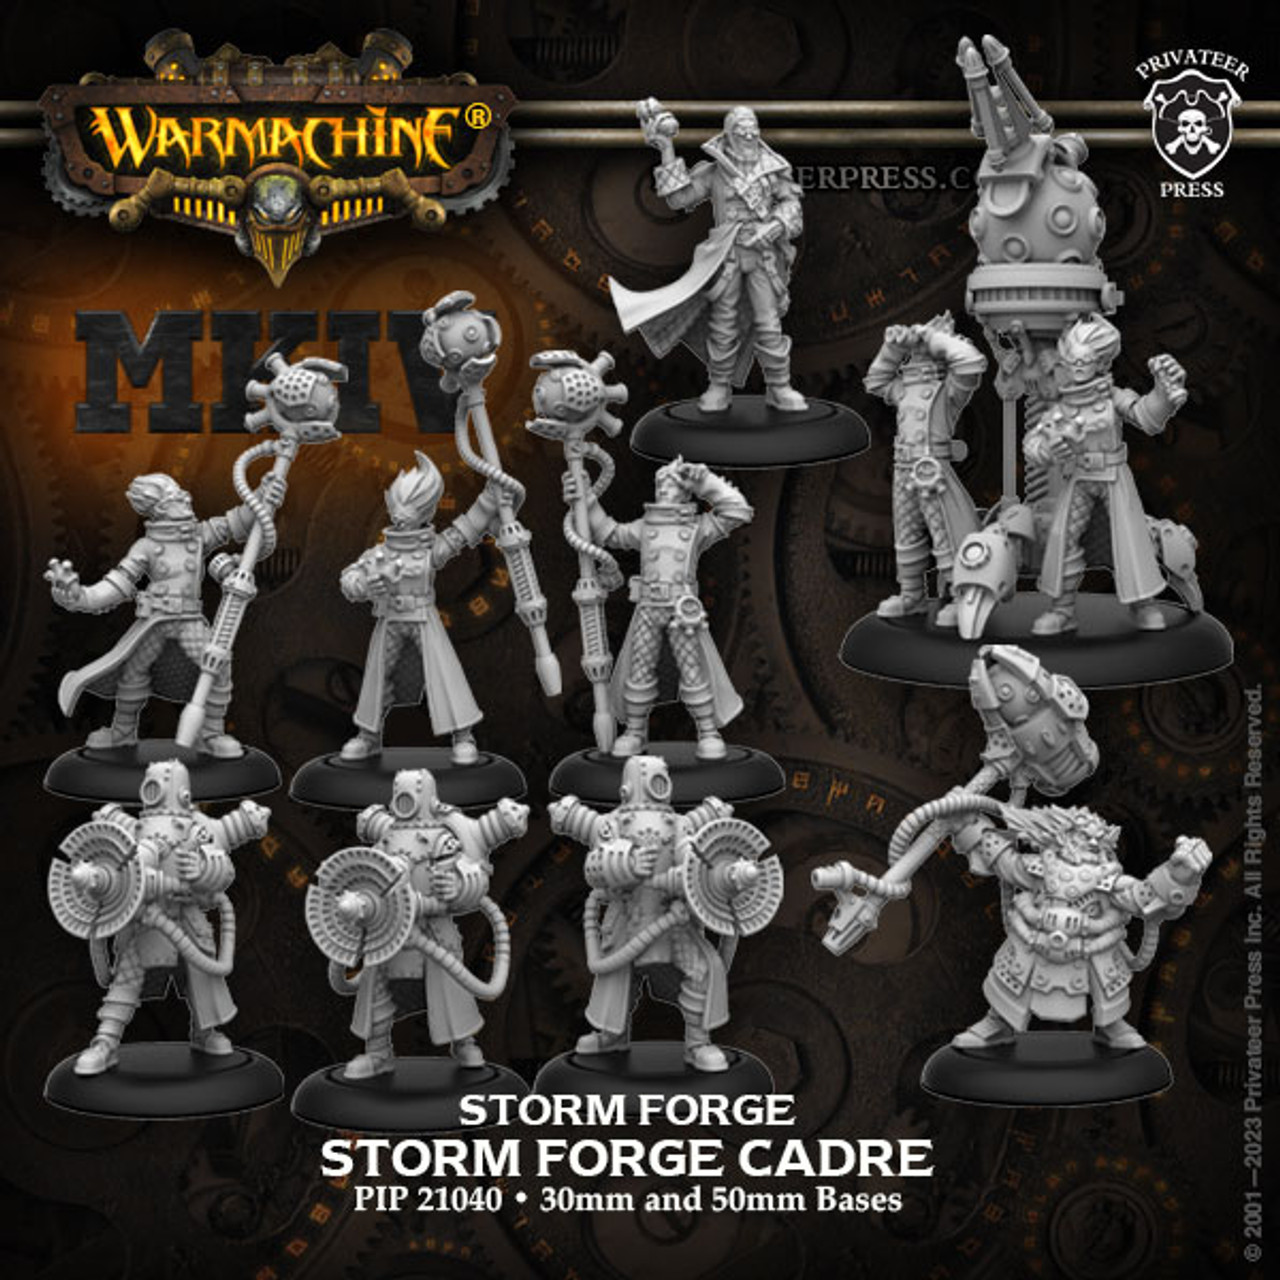 Storm Forge Cadre - Warmachine